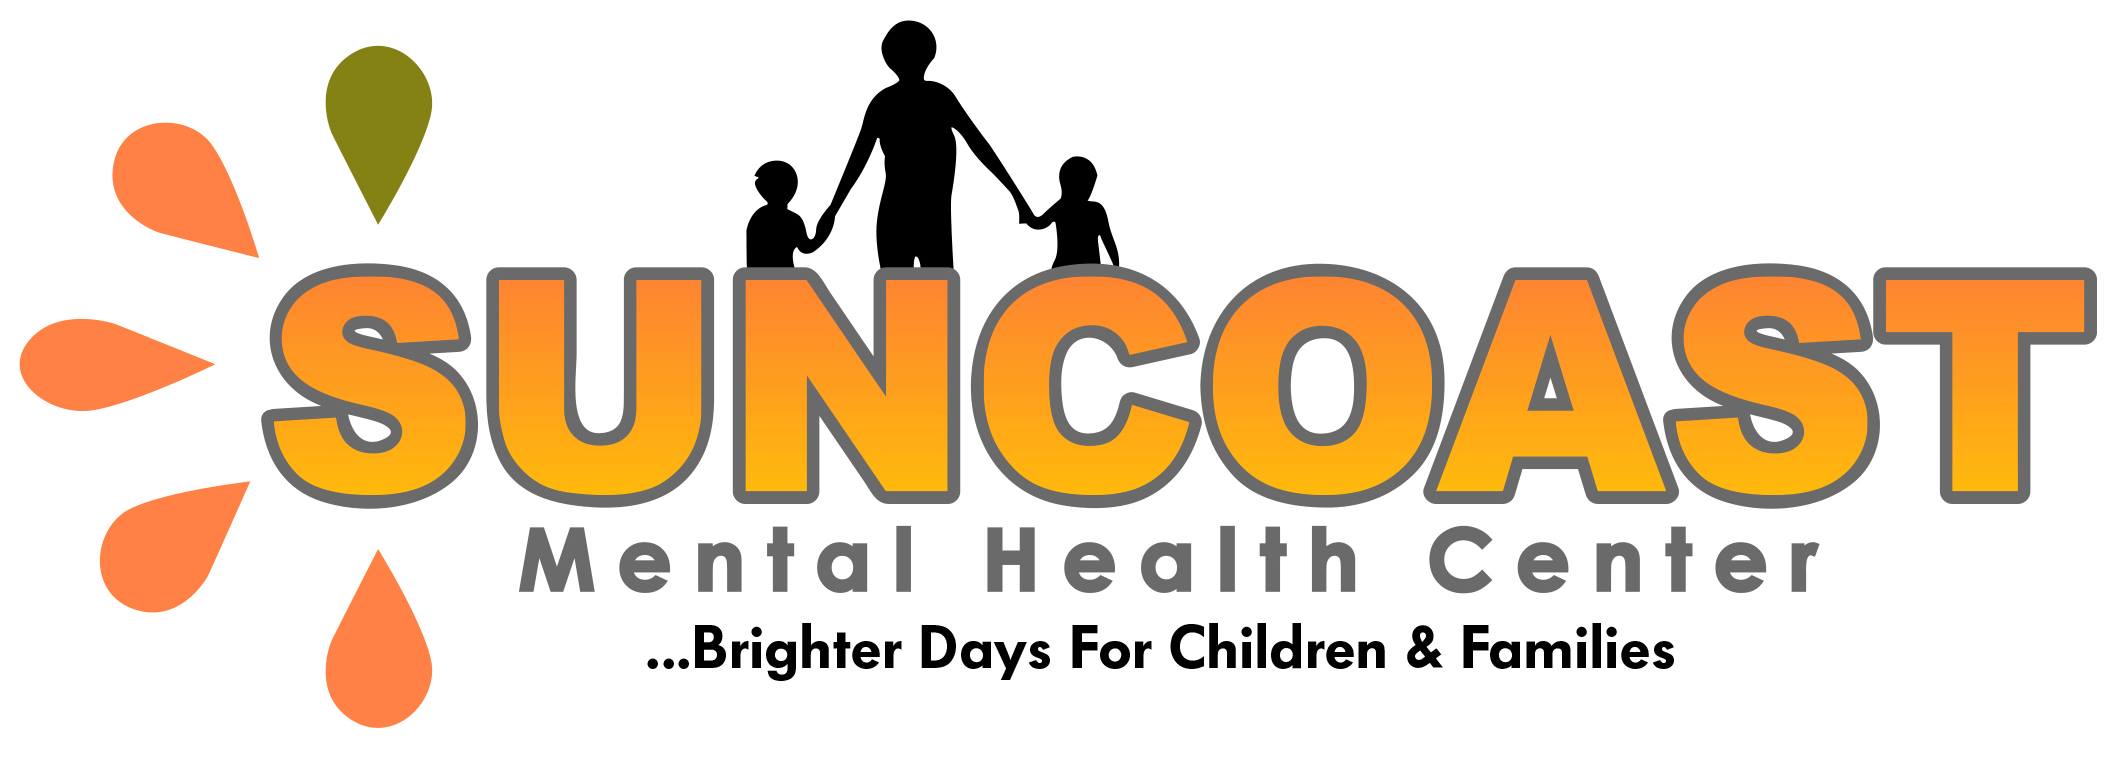 Suncoast Mental Health Center, Inc.